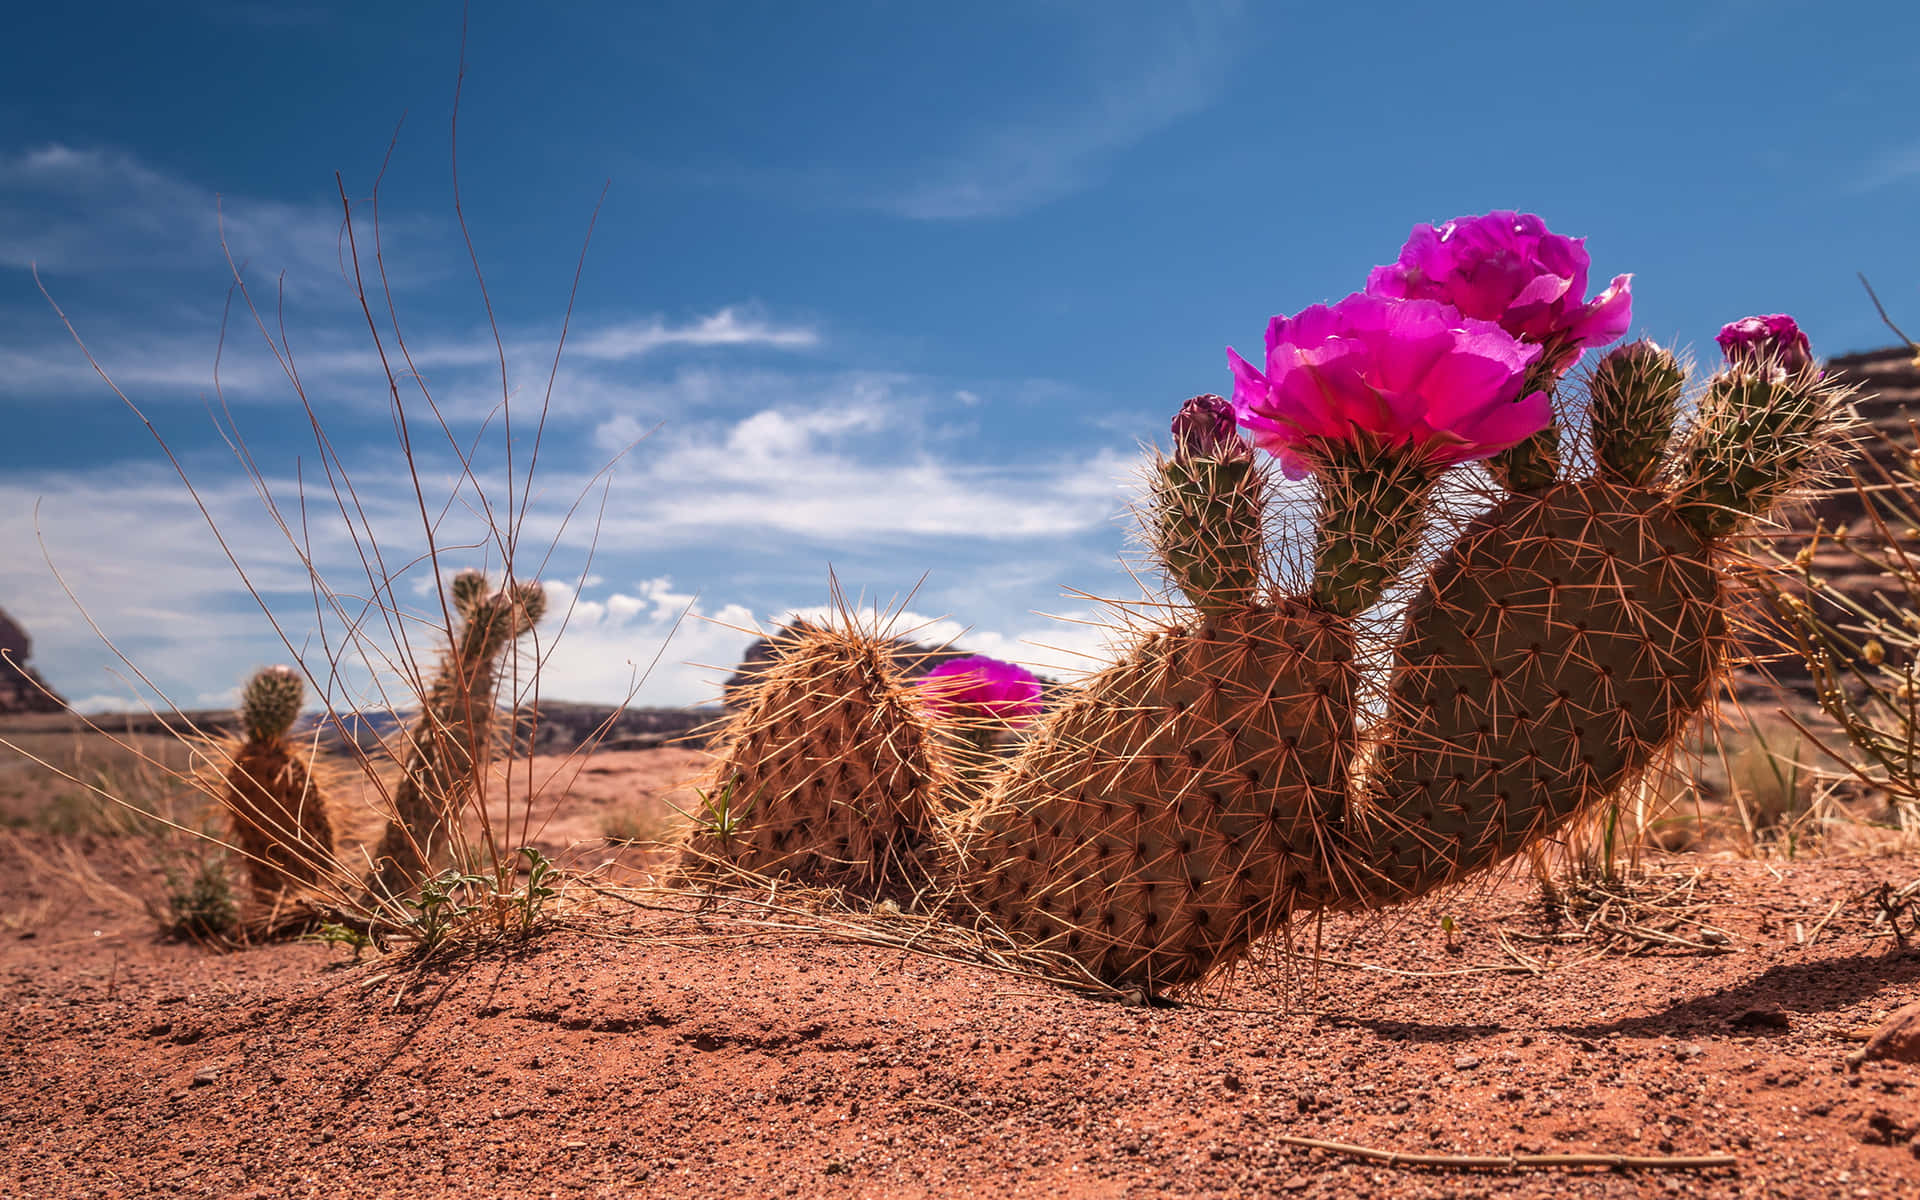 “Colorful Cactus Against Desert Background”